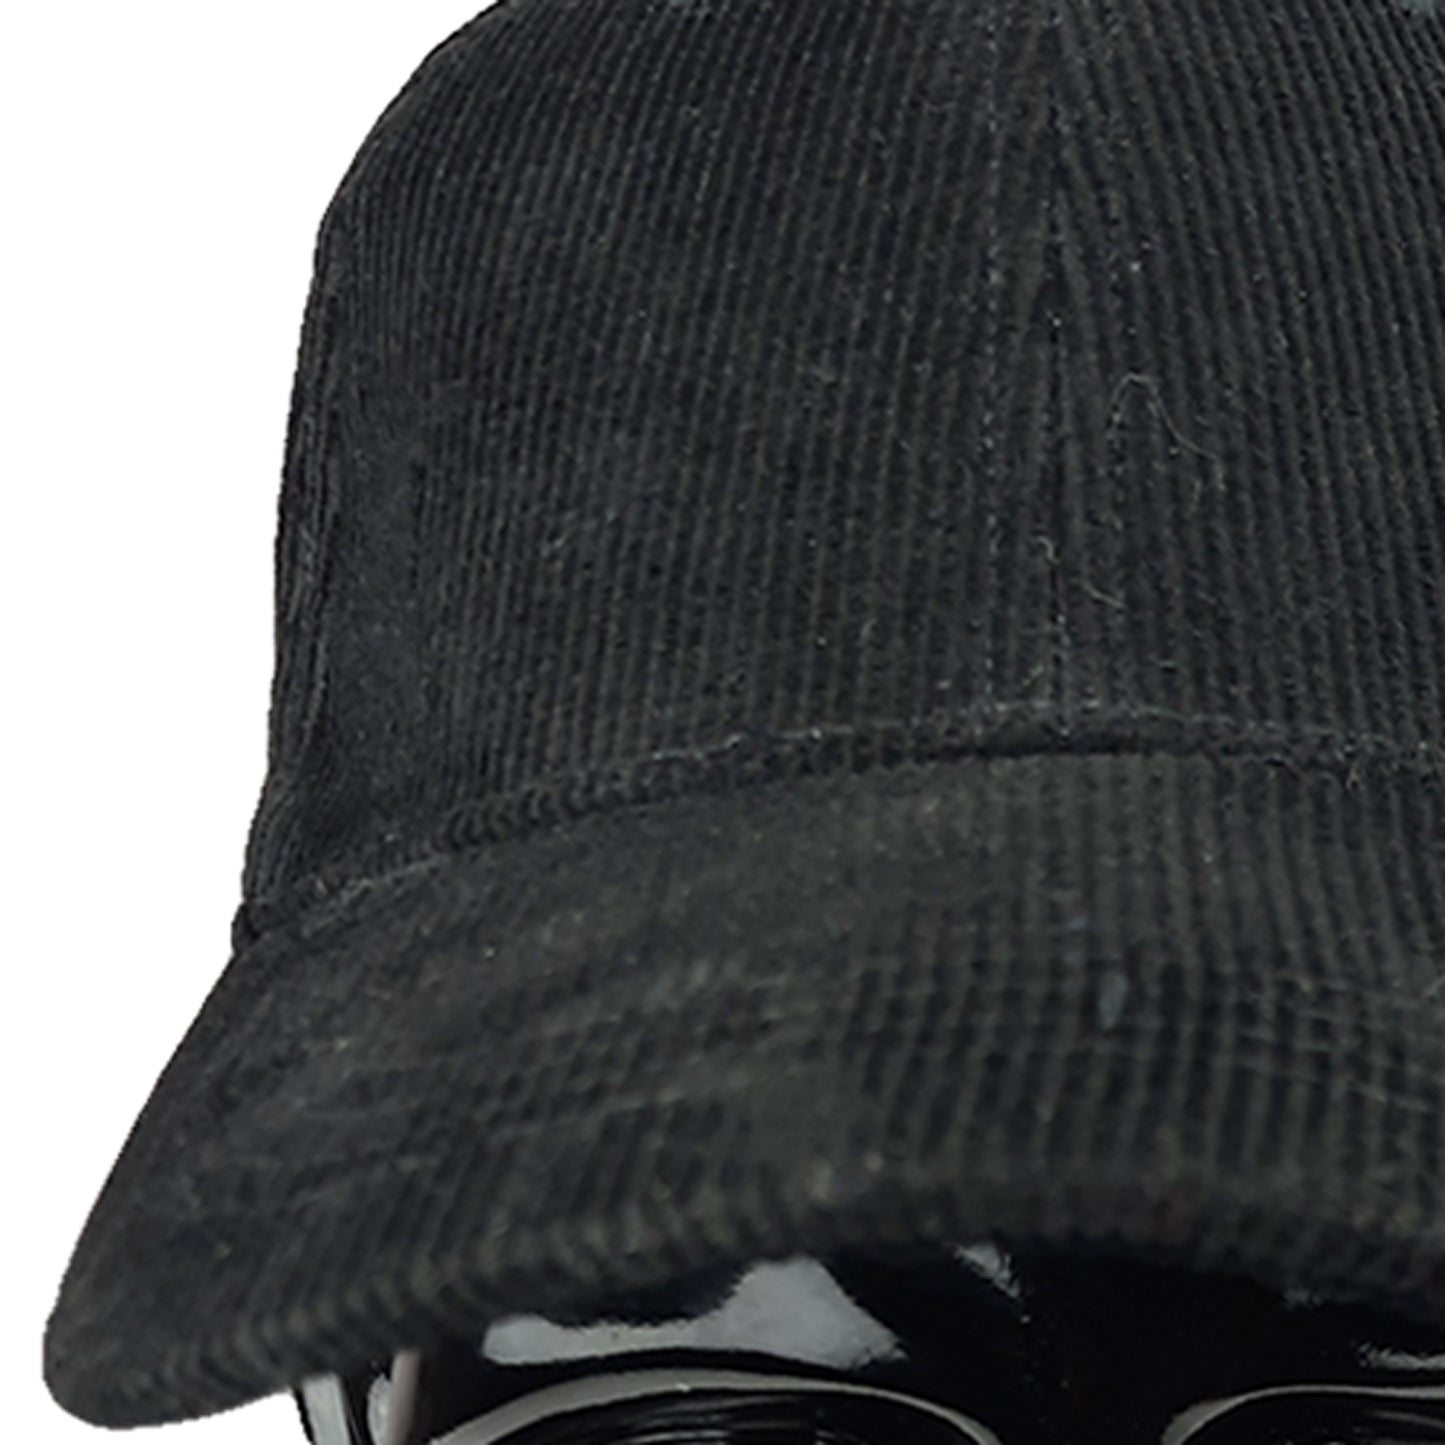 Corduroy Jokey Hat Black 1023 BLACK